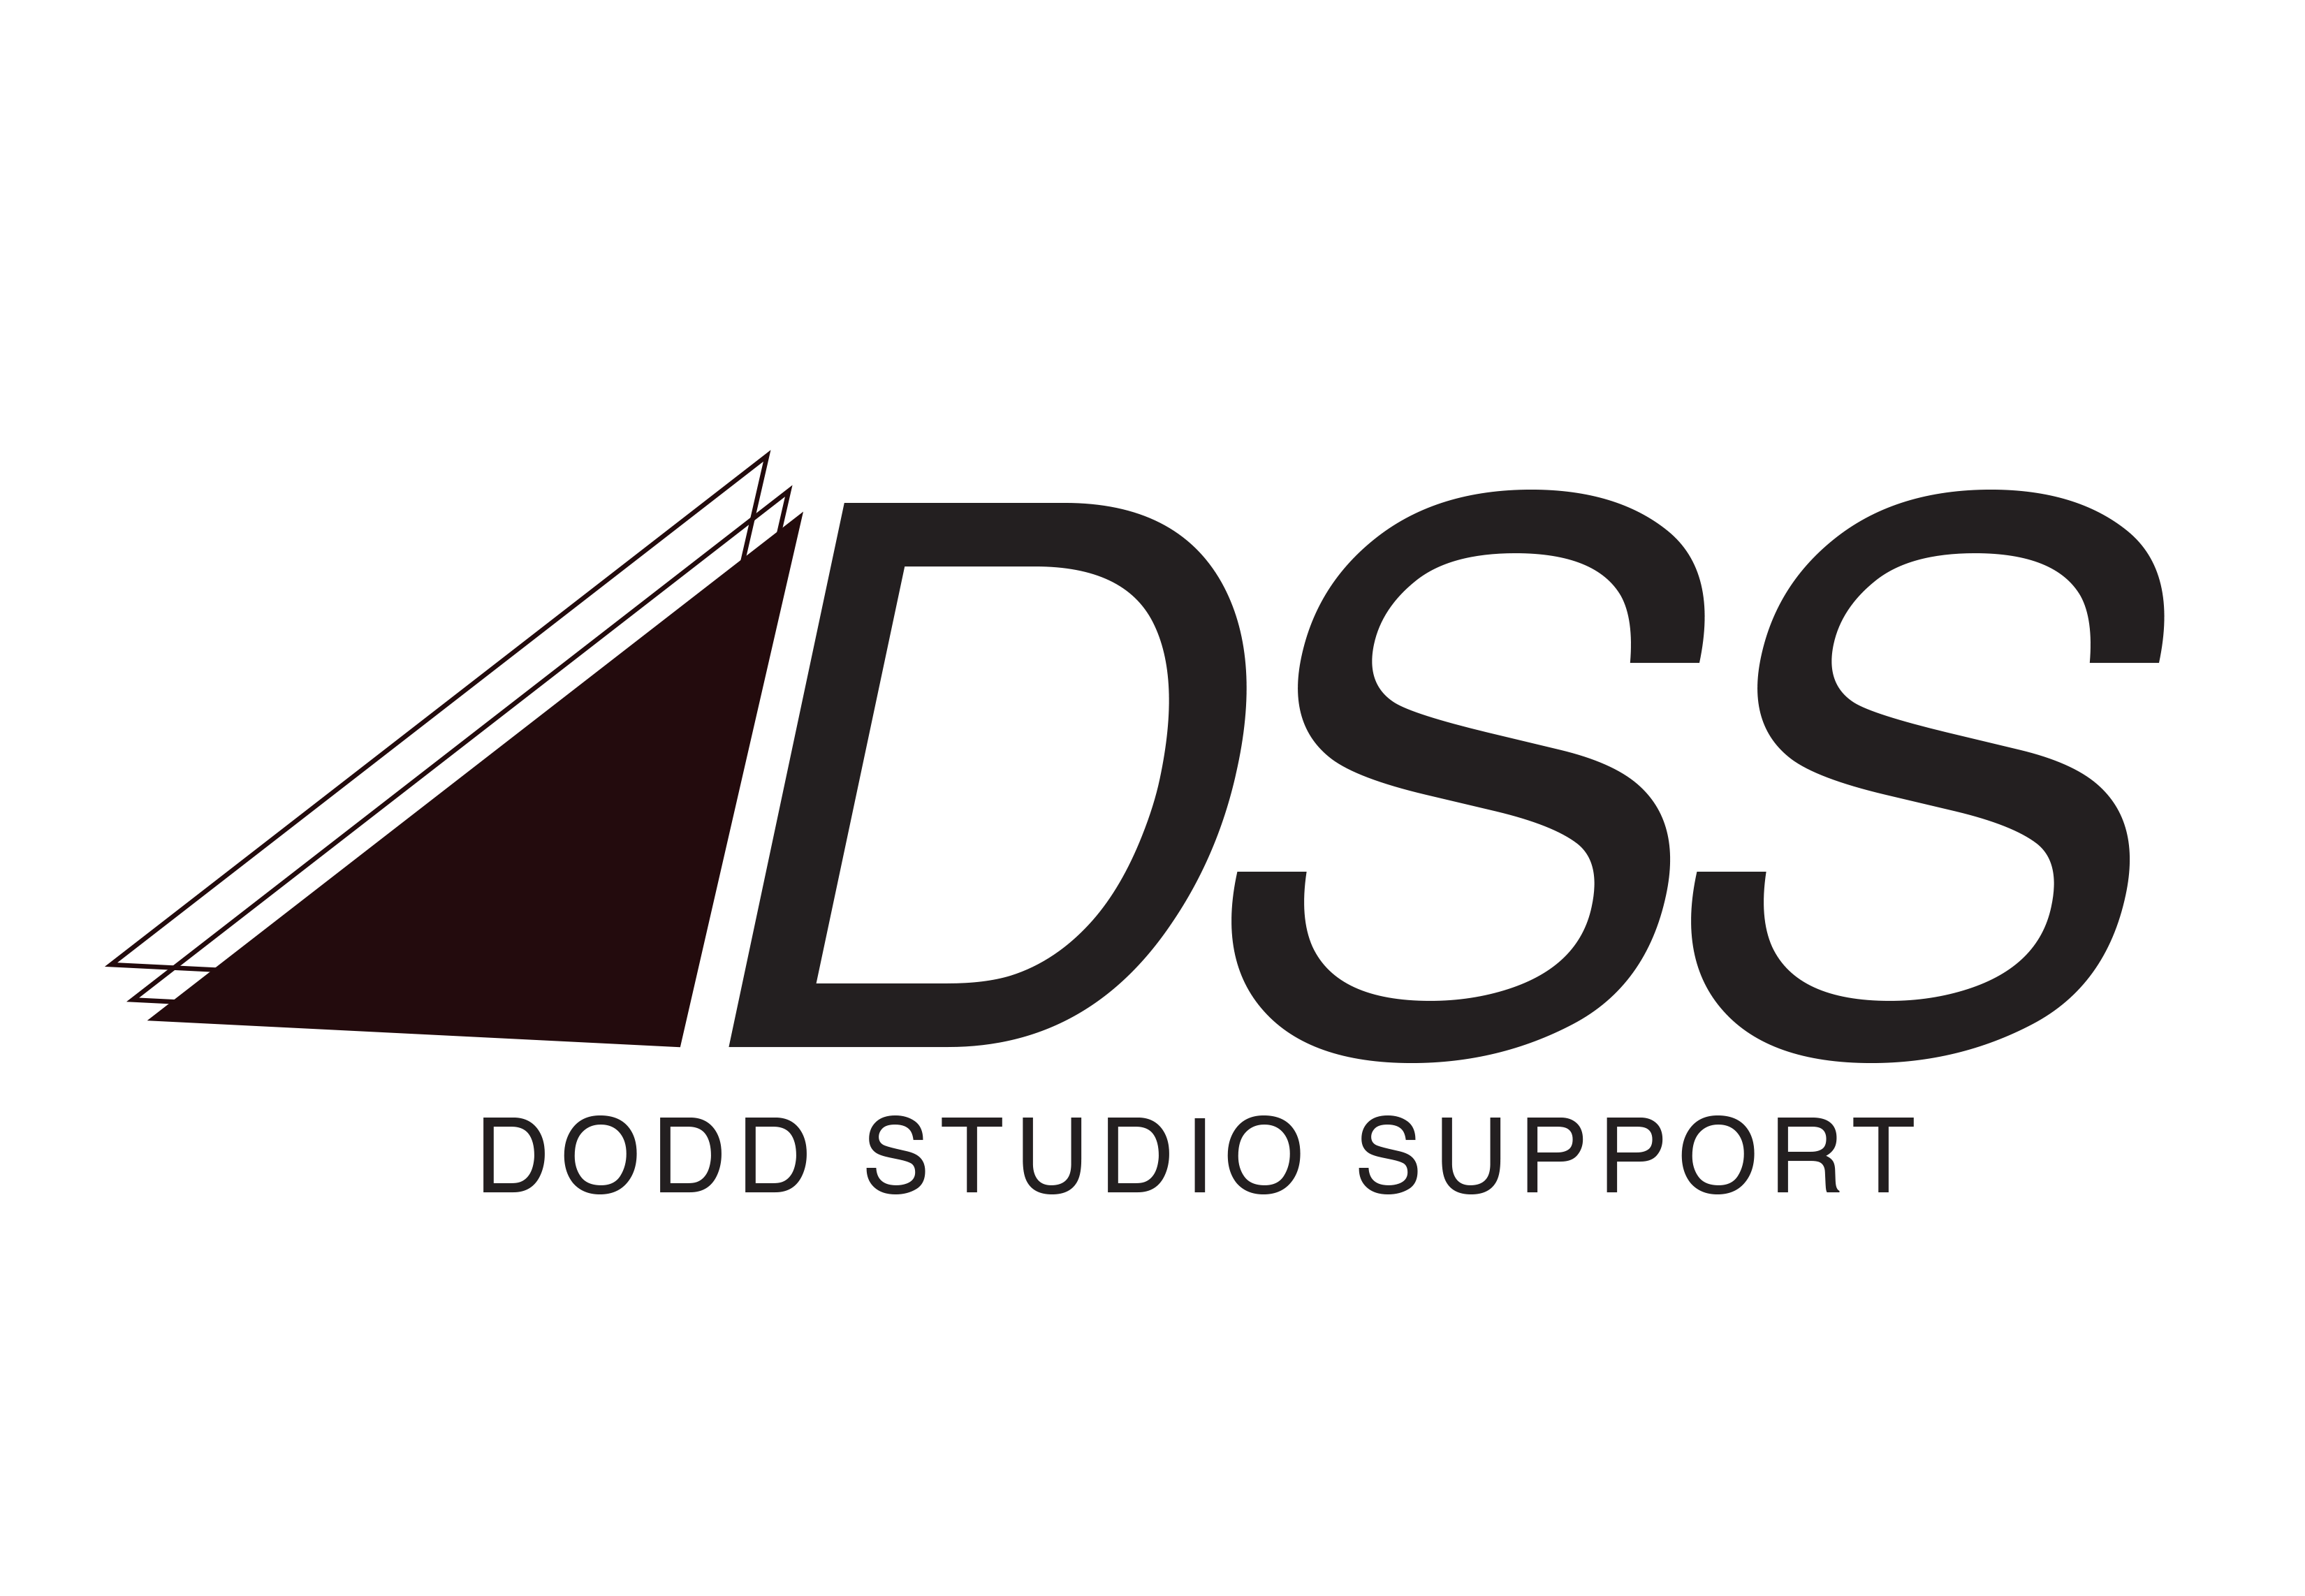 Dodd Studio Support Logo